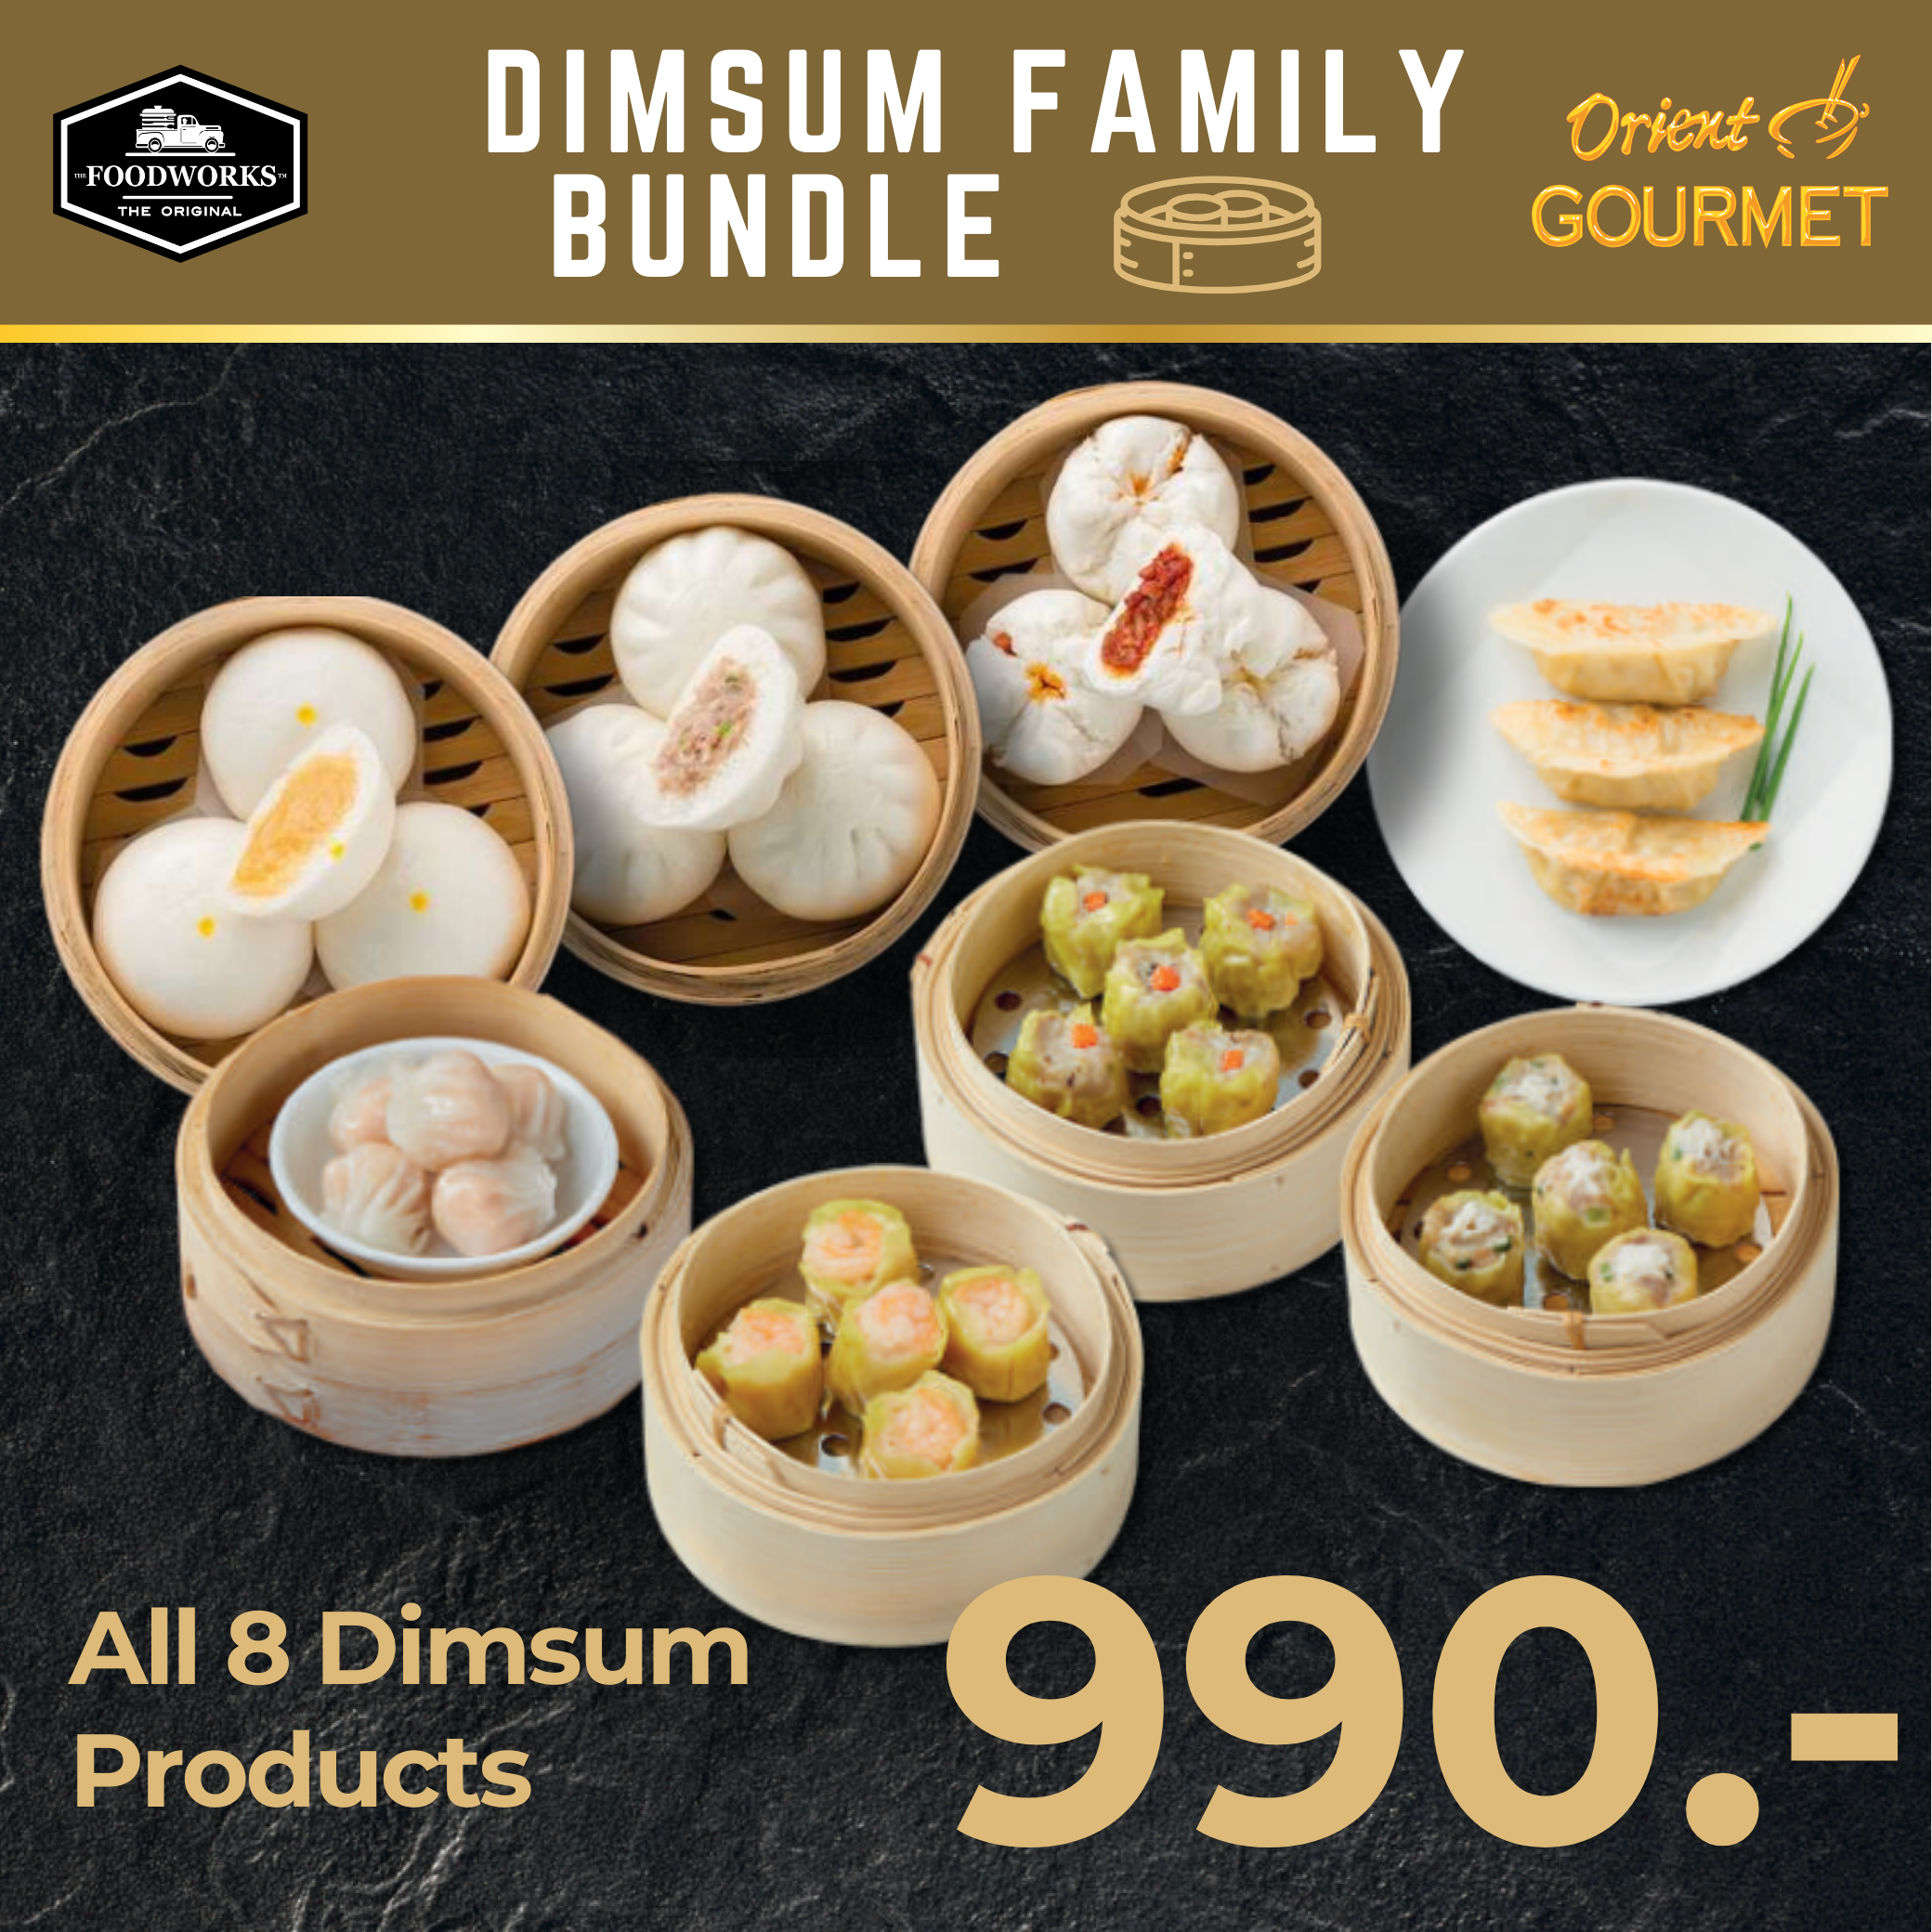 Dimsum Family Bundle ชุดติมซำ สุดคุ้ม - The Foodworks 